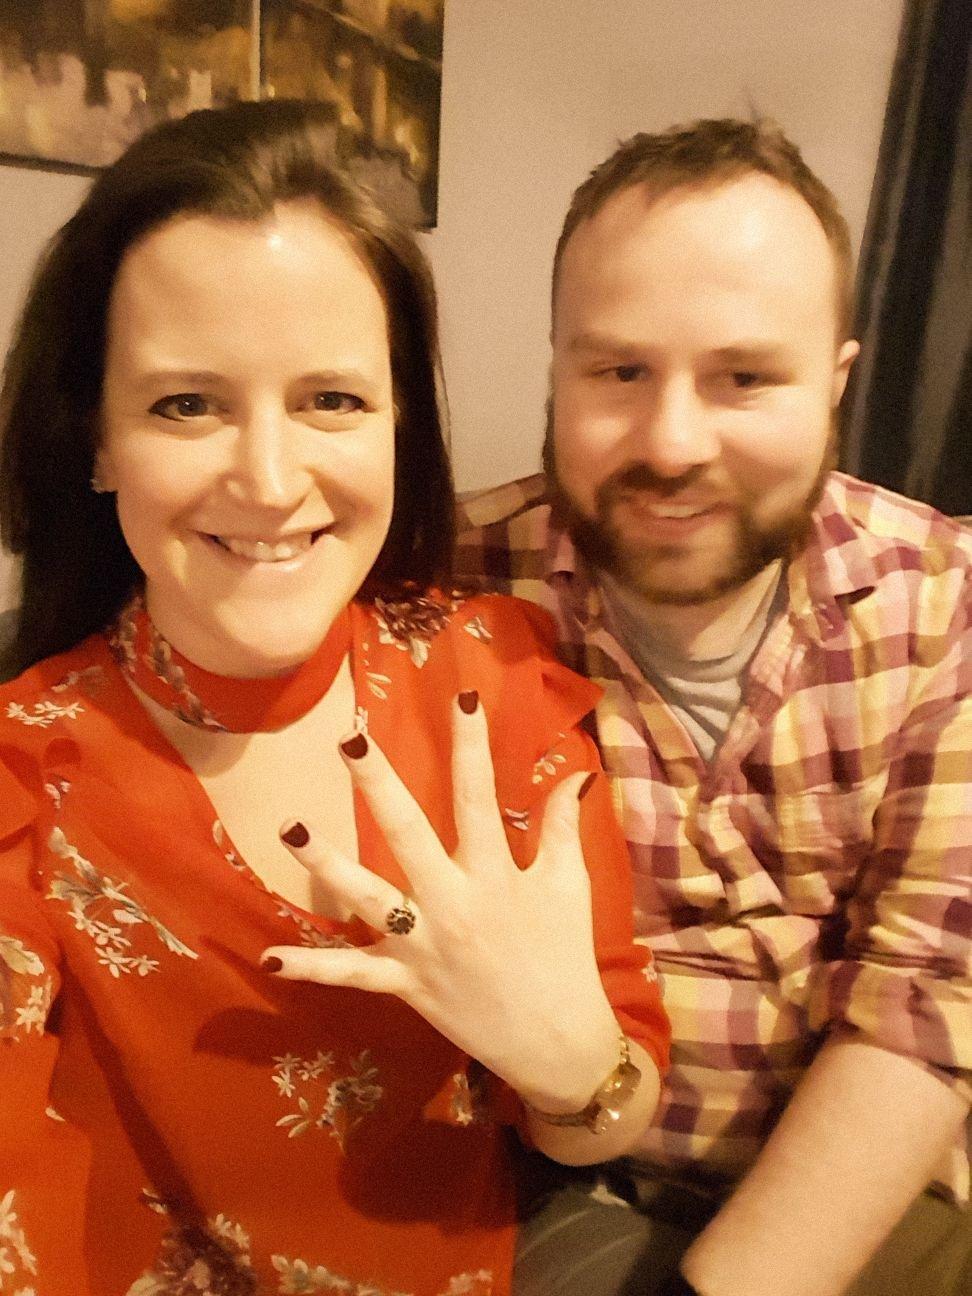 Matthew Reville met his fiancée Rachel Evans two years ago in a bar in Westminster